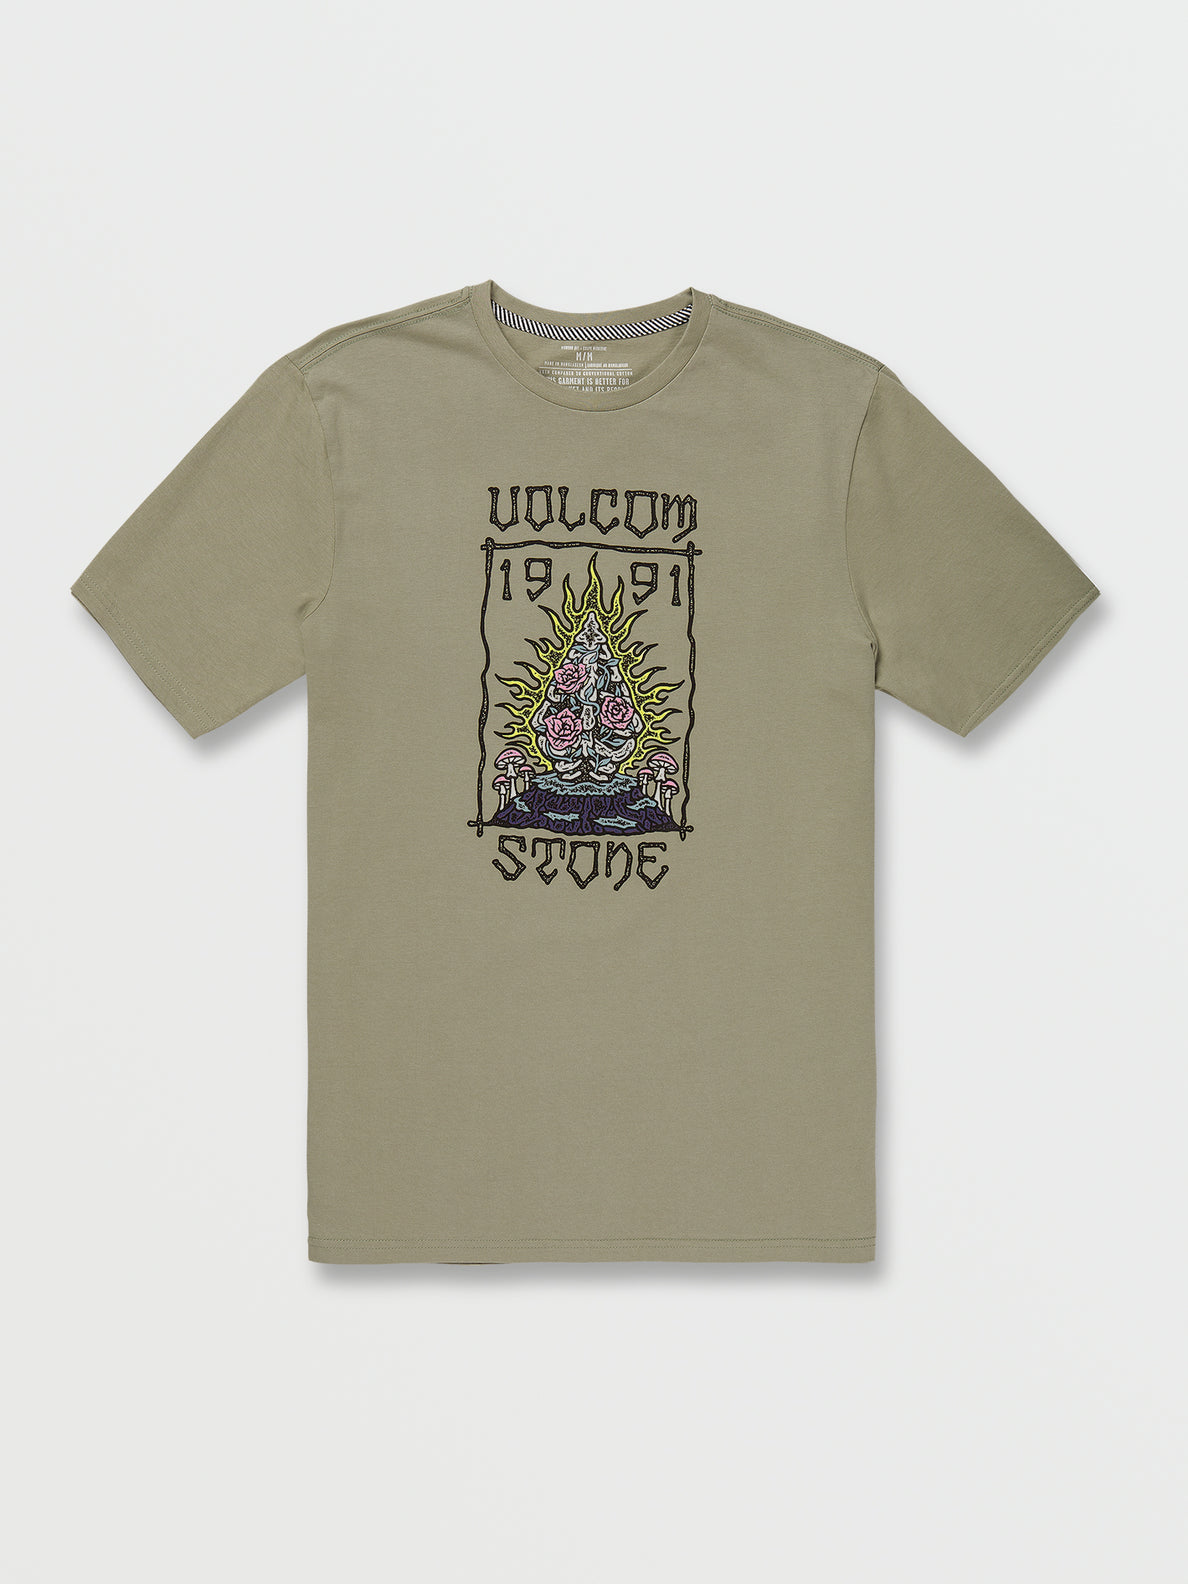 Camiseta Volcom Caged Stone Rinsed Seagrass Green | surfdevils.com